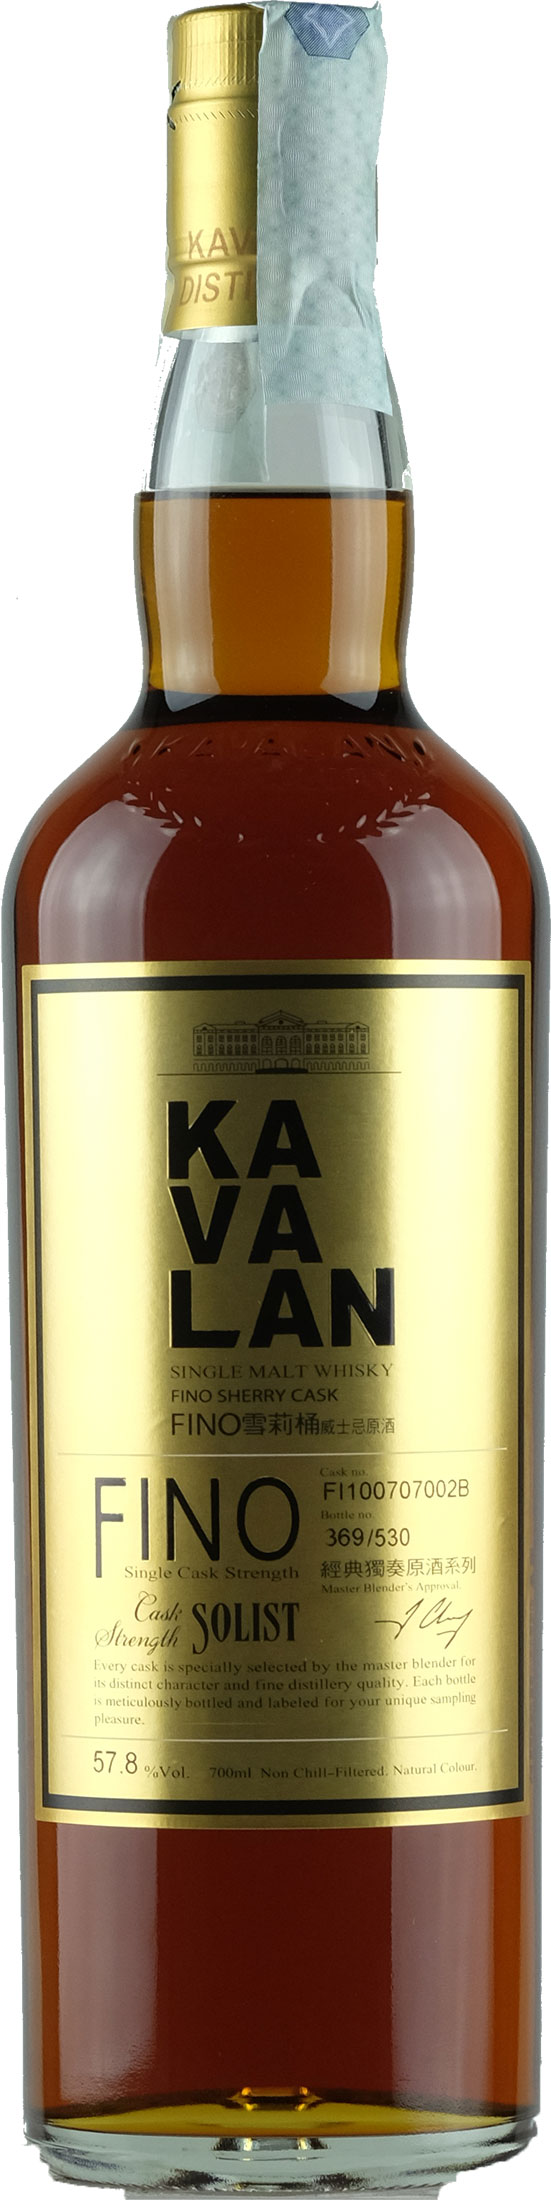 Kavalan fino whisky sherry cask - xtrawine.com